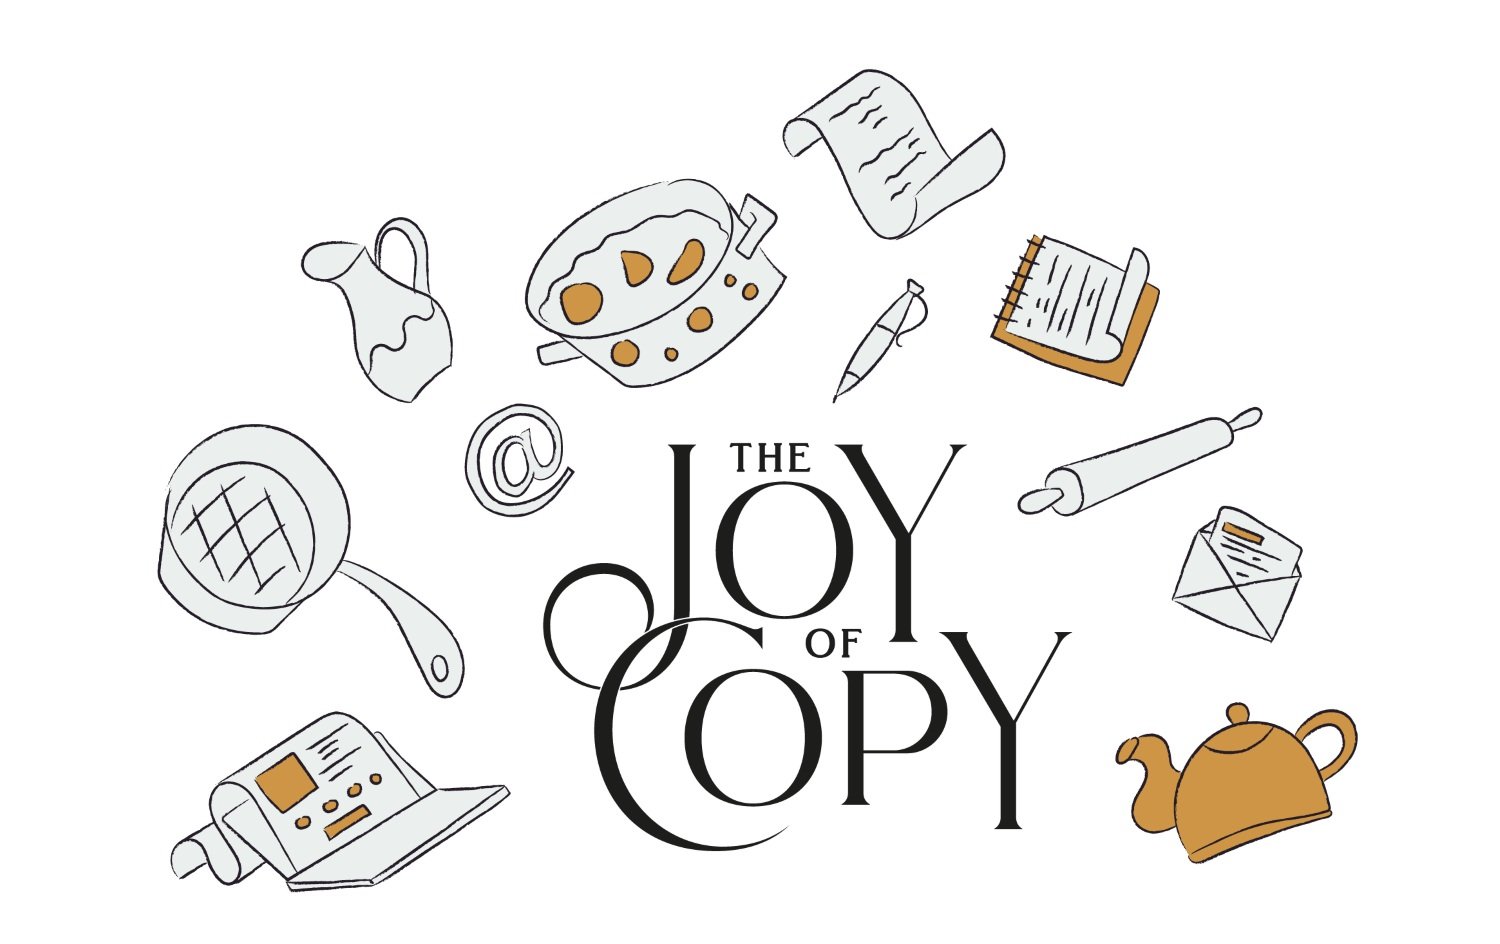 Joy+of+Copy+web.jpg